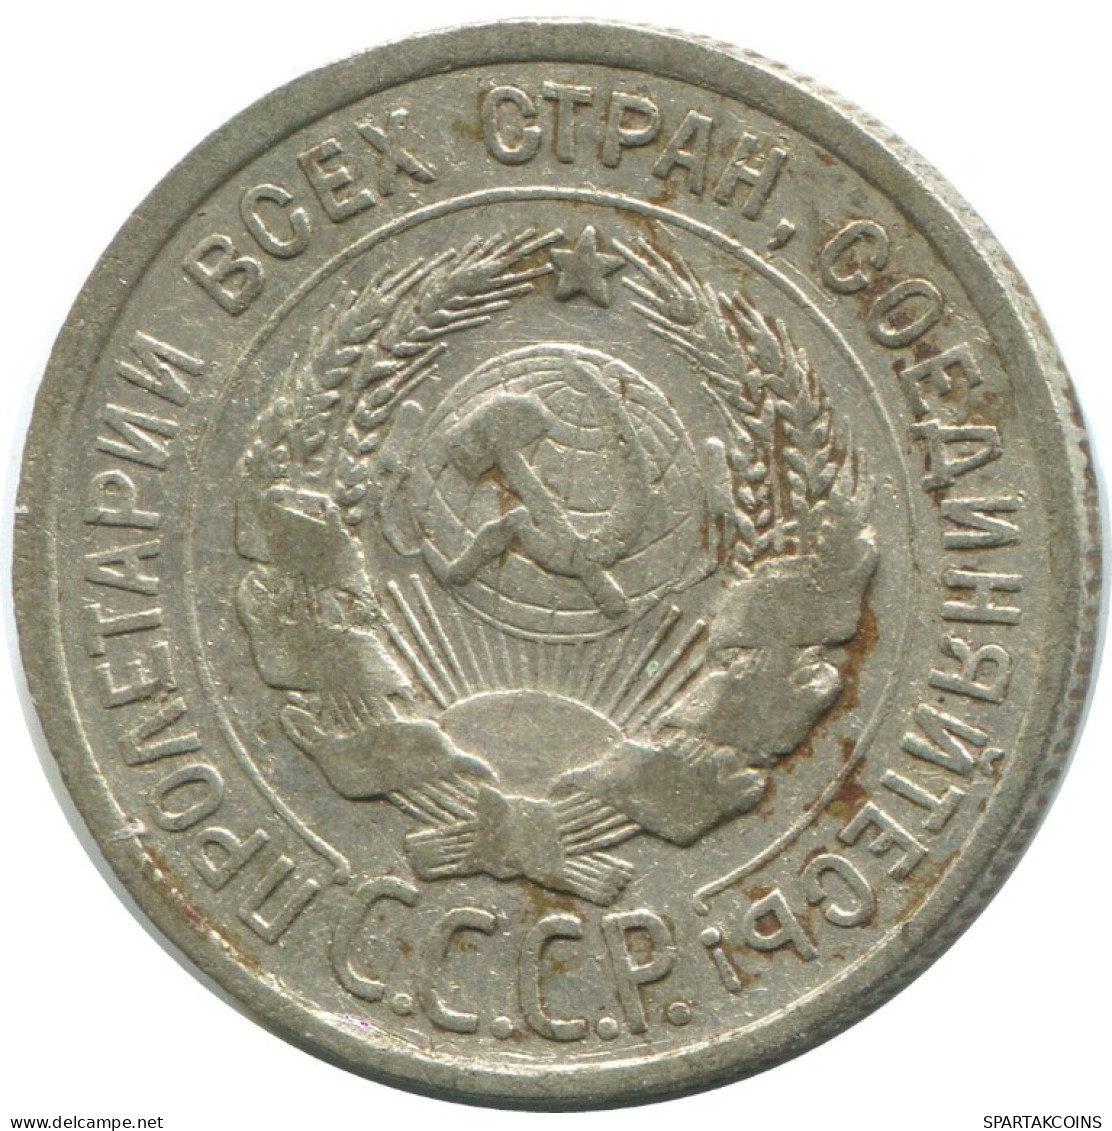 20 KOPEKS 1924 RUSSIA USSR SILVER Coin HIGH GRADE #AF277.4.U.A - Russland